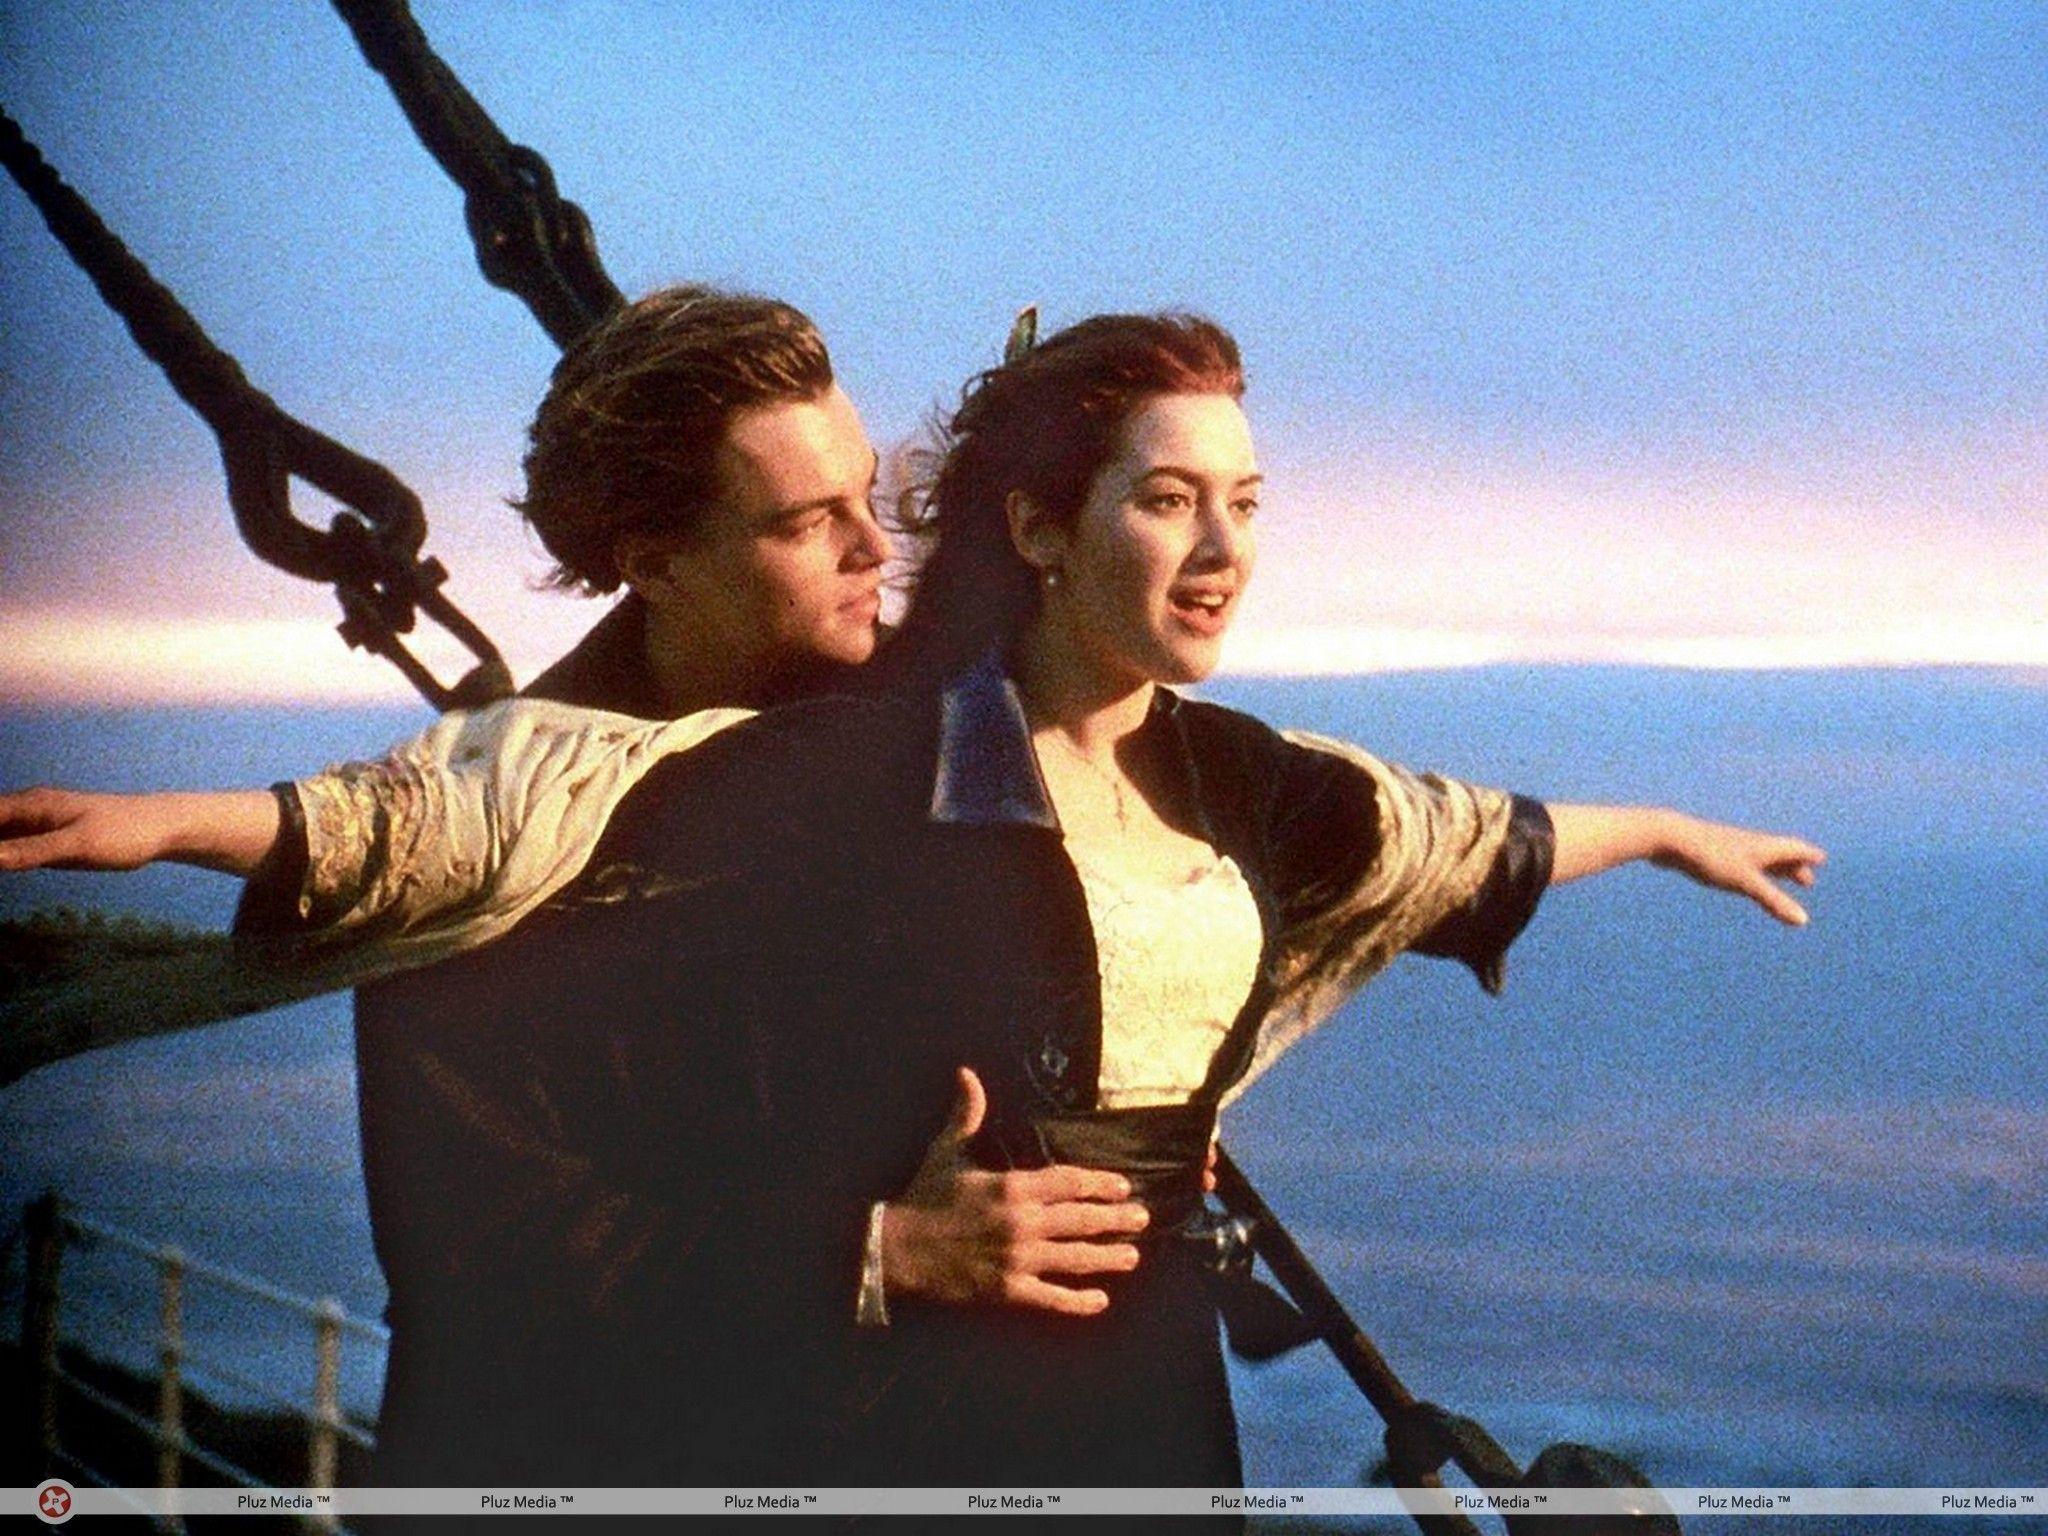 Titanic Movie Stills and Movie Wallpaper ilikewalls